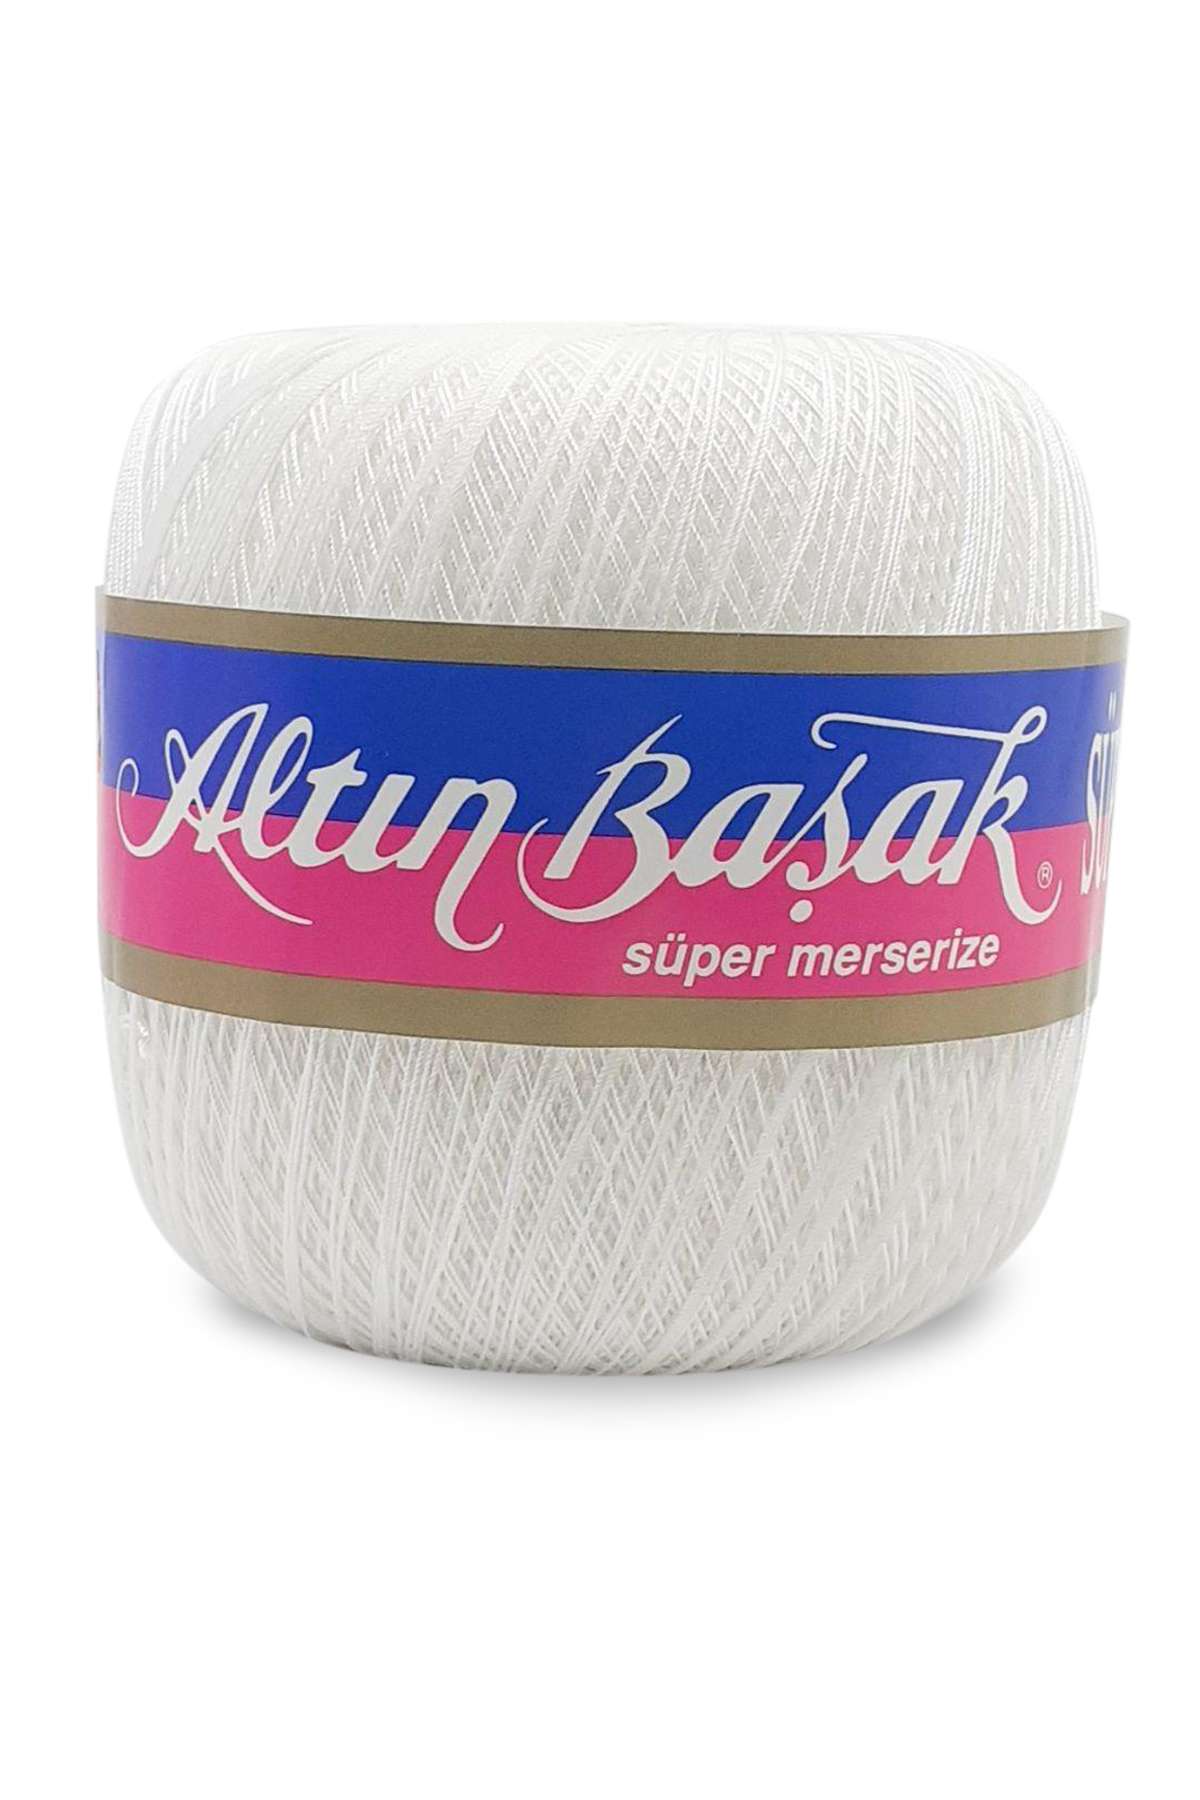 Altinbasak Mercerized Cotton Crochet No:50